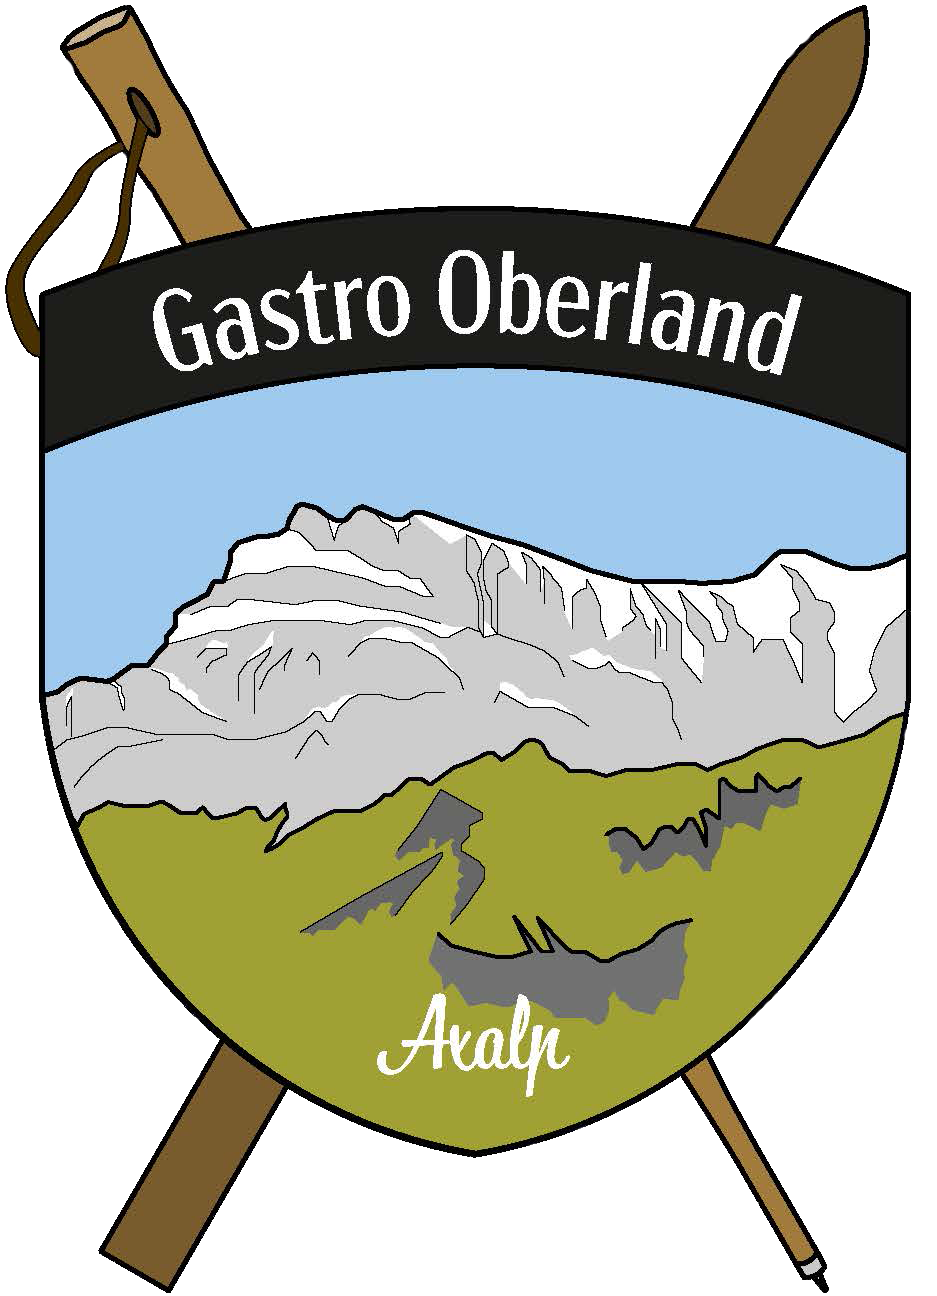 Gastro Oberland